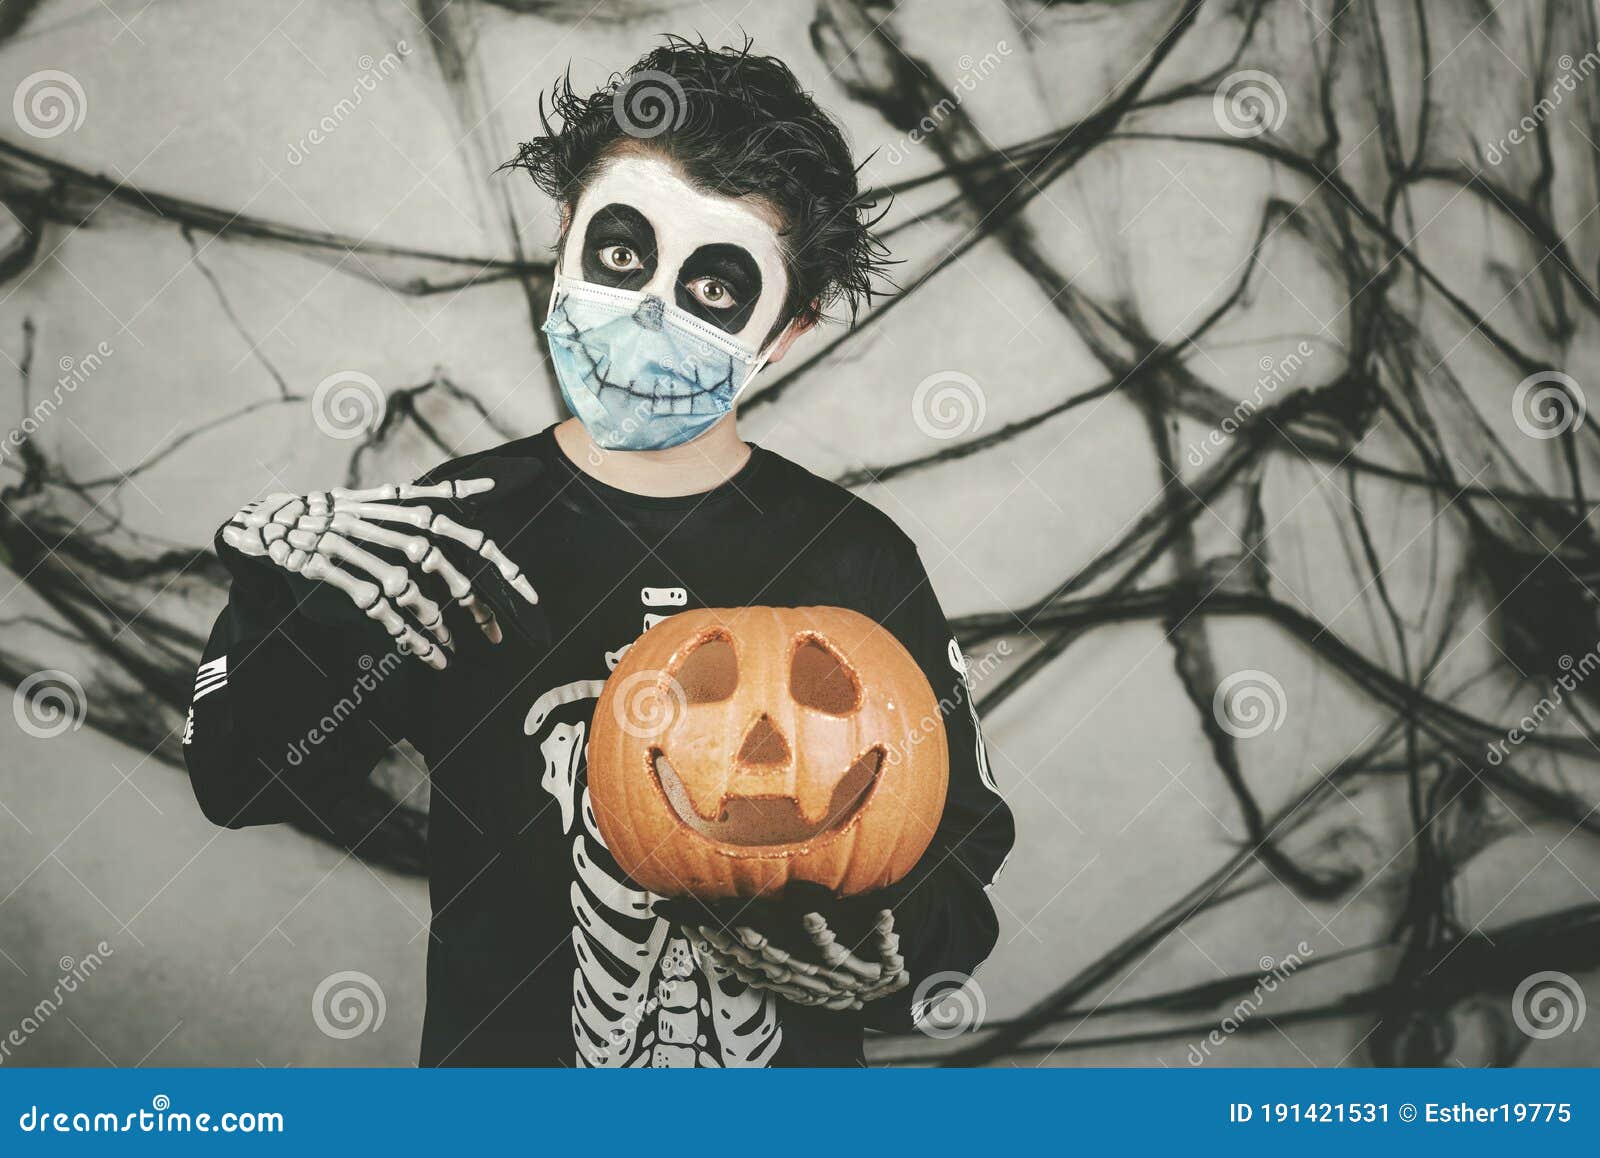 happy halloween.kid wearing medical mask in a skeleton costume with halloween pumpkin